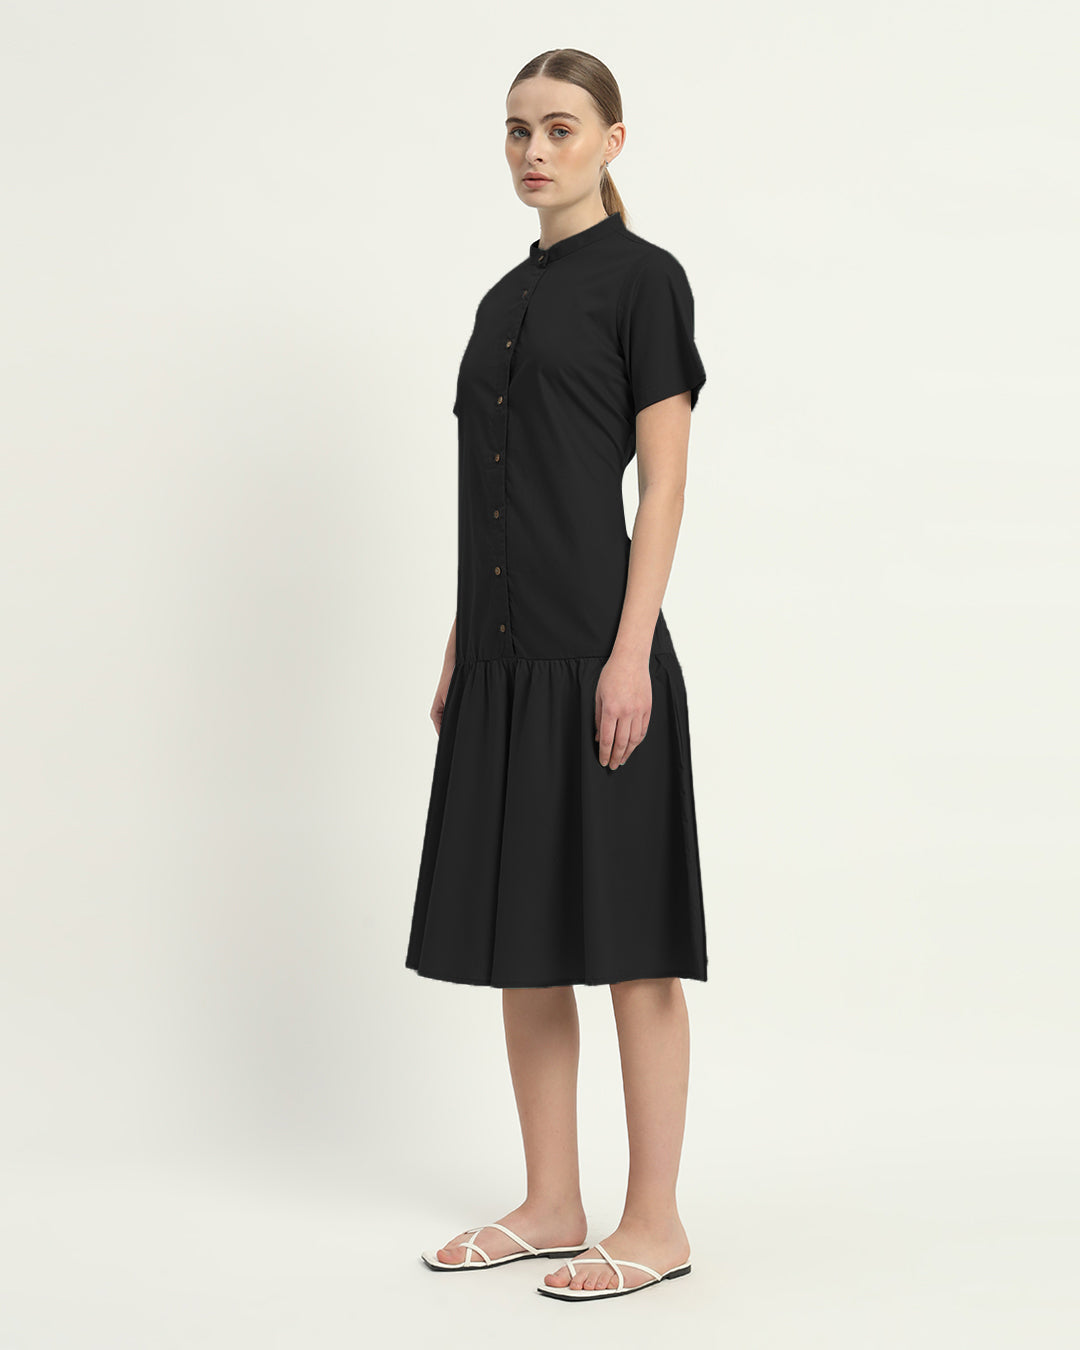 The Melrose Noir Cotton Dress